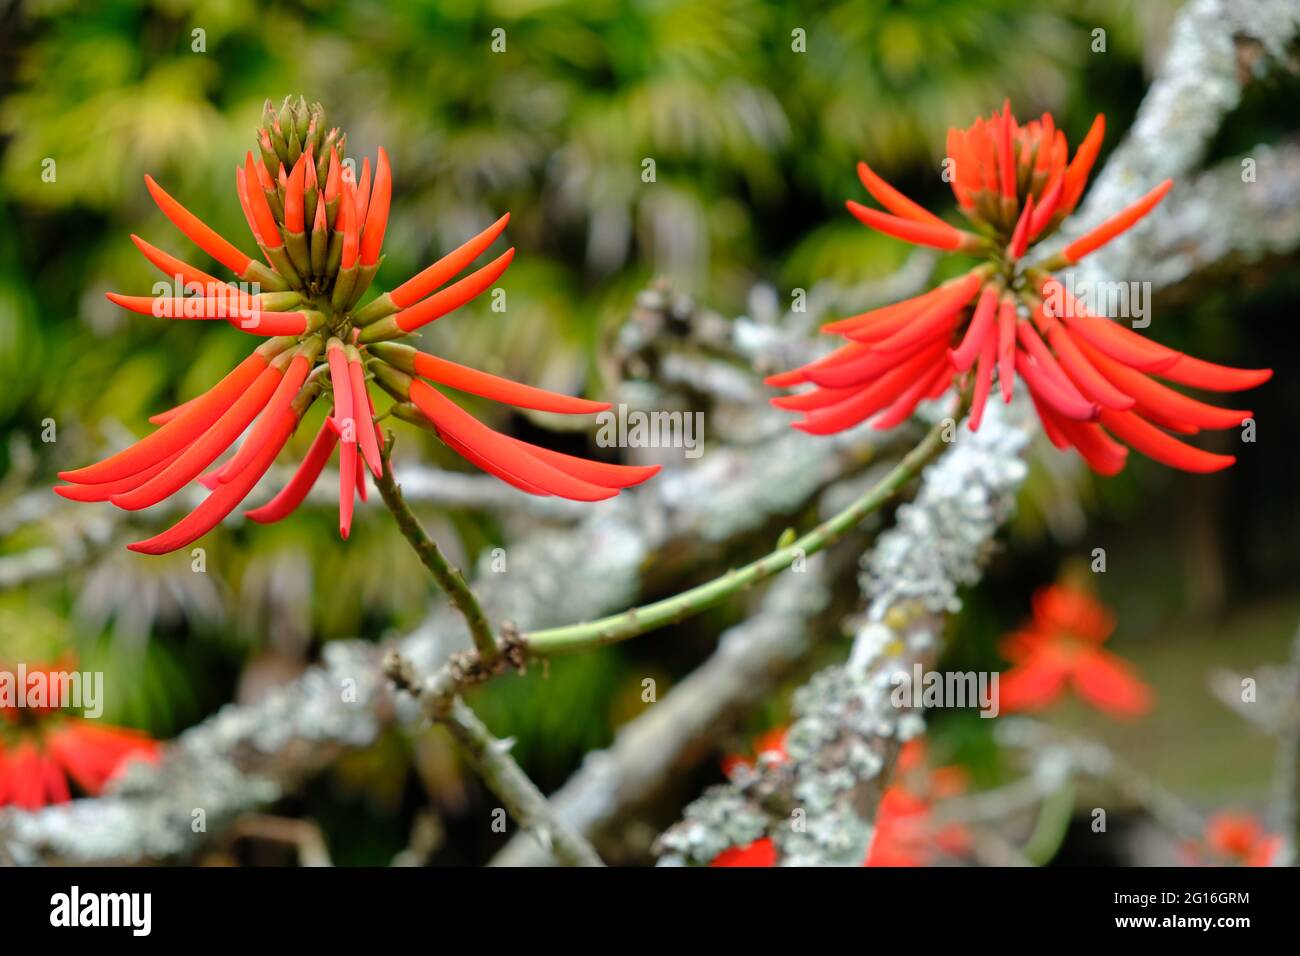 Brazil Sao Paulo - Botanical garden Erythrina speciosa flower - Coral tree - Flame tree Stock Photo